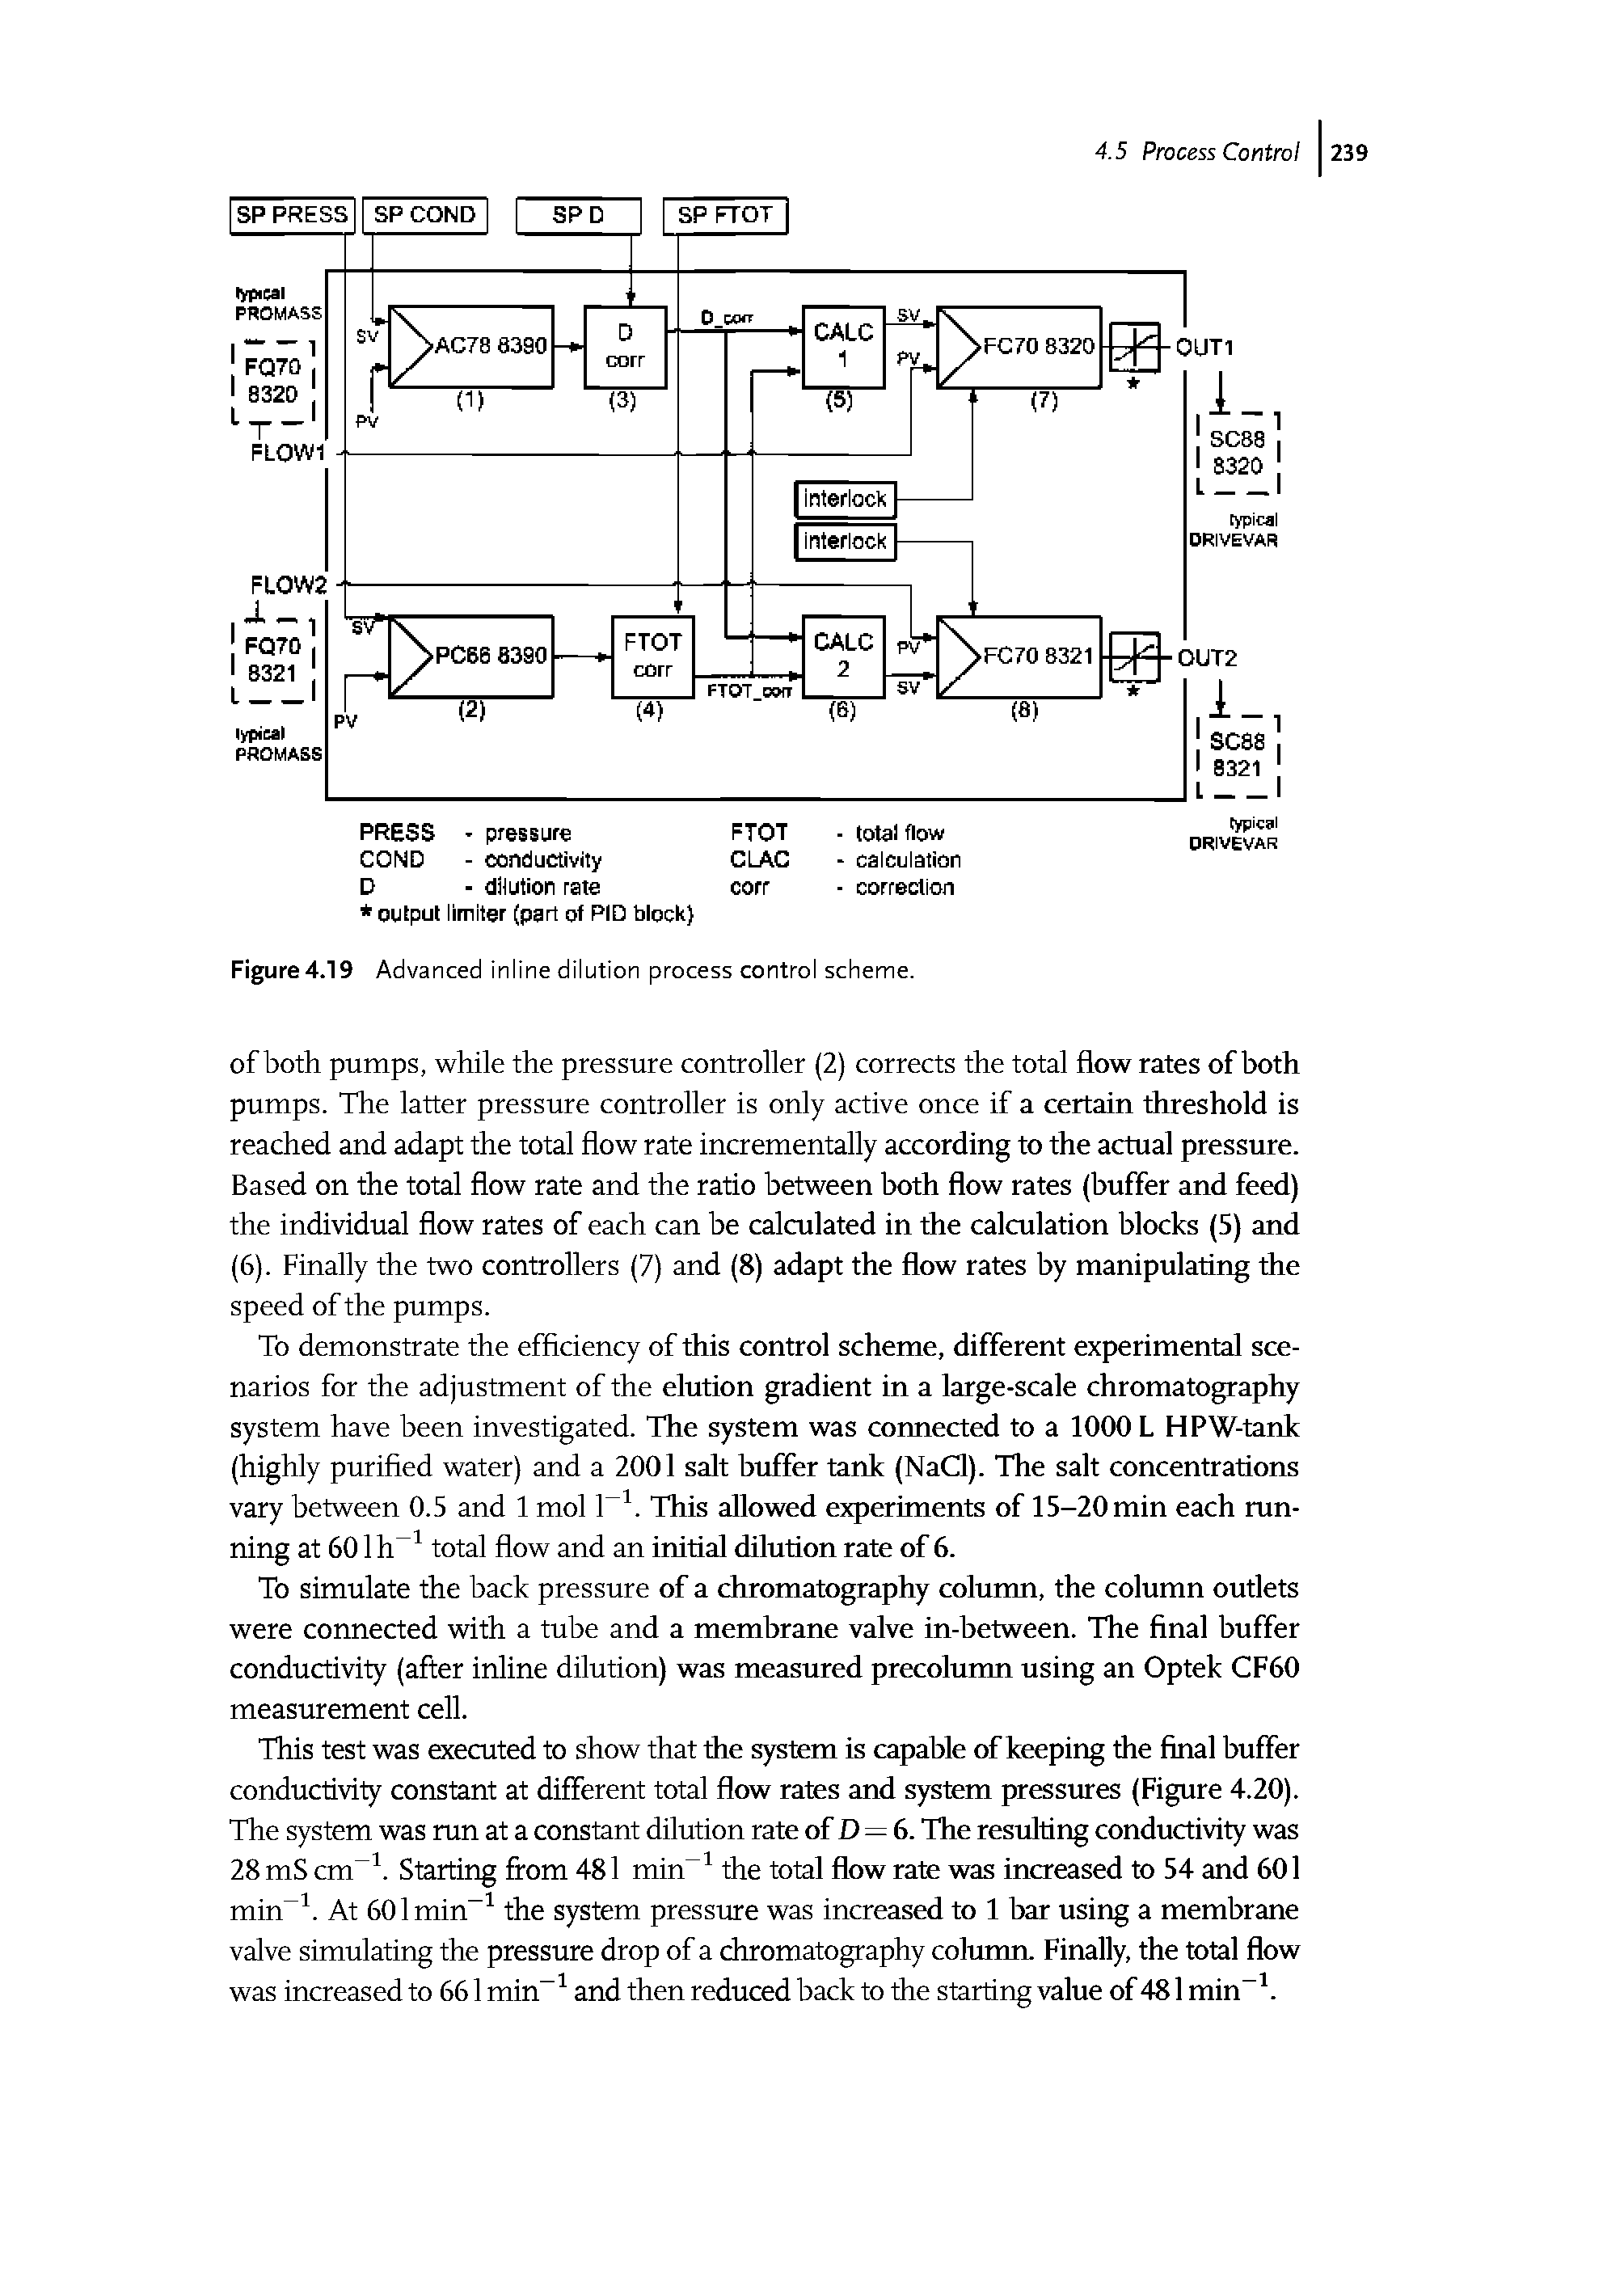 Figure 4.19 Advanced inline dilution process control scheme.